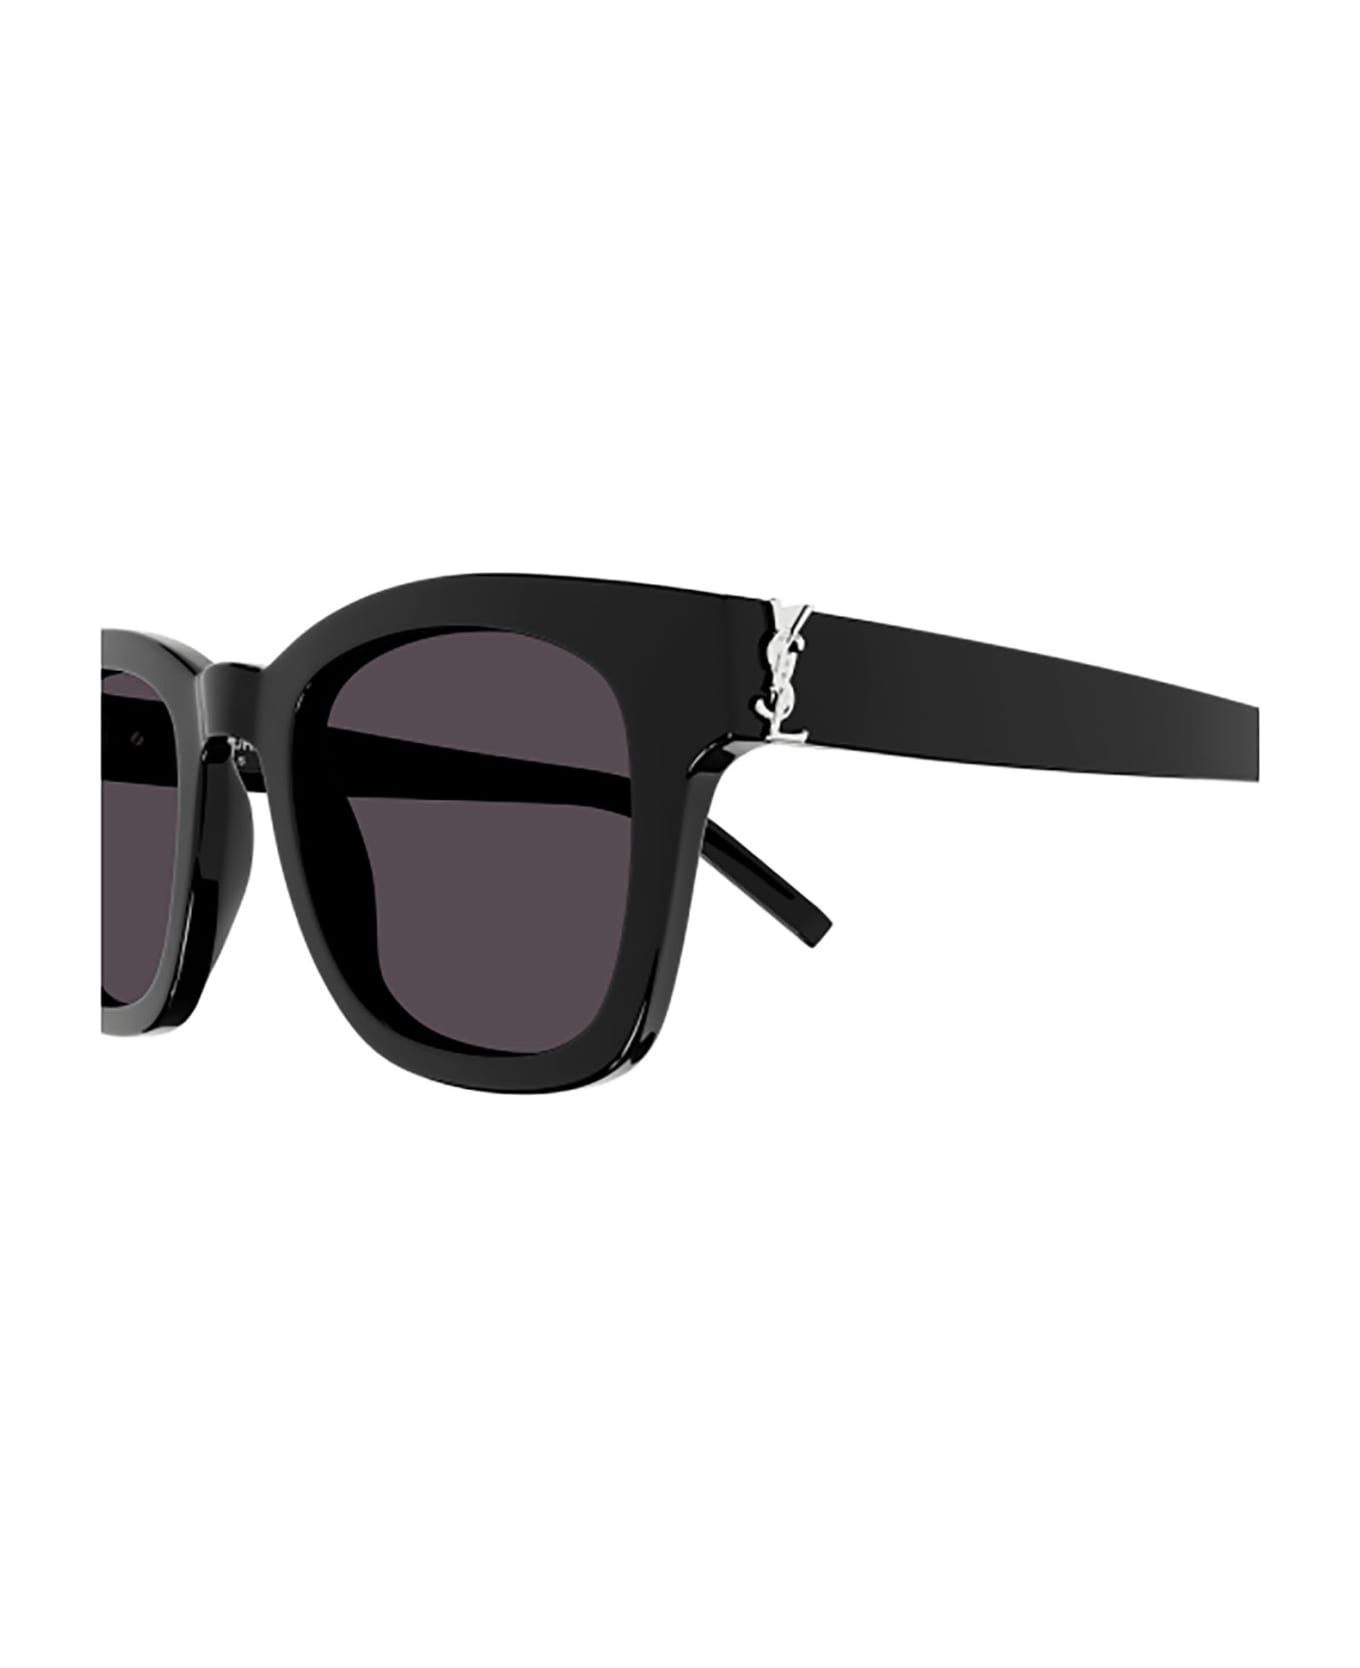 Saint Laurent Eyewear Sl M124 Sunglasses - 001 Diesel DL02514972Z Sunglasses